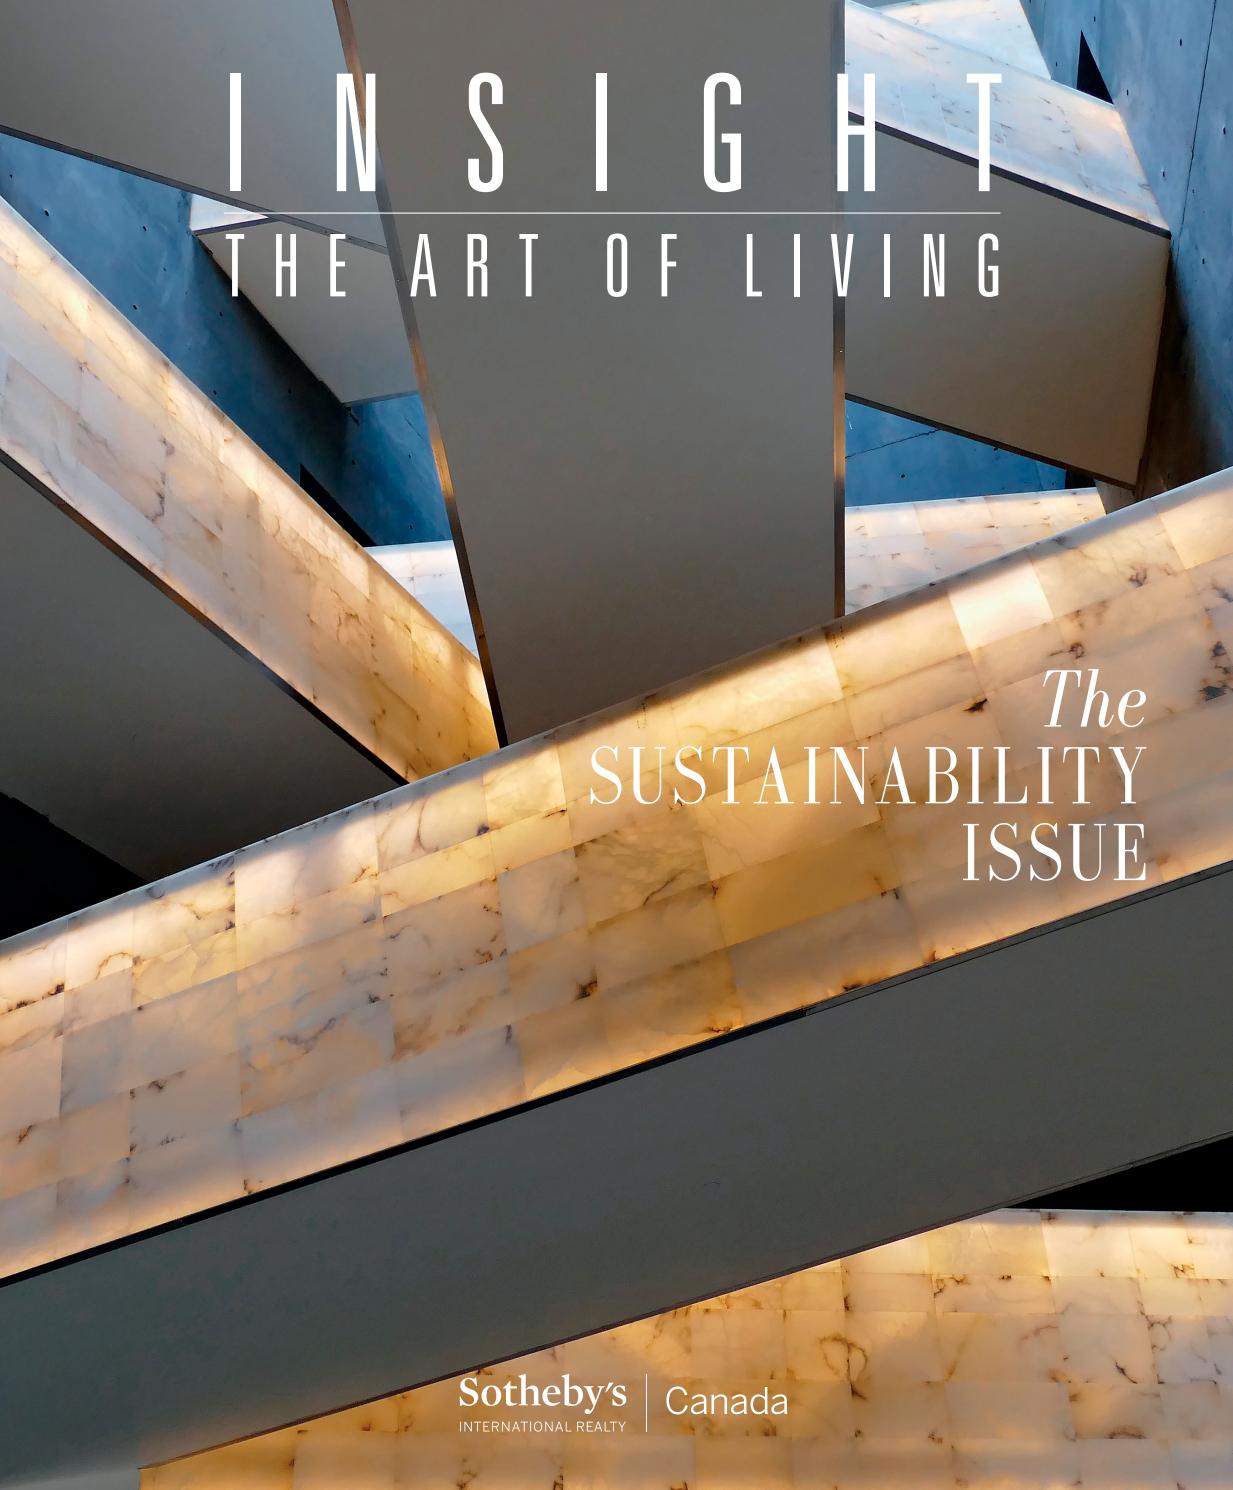 Salon De Jardin Aluminium Amazon Nouveau Insight the Art Of Living Spring 2019 by sotheby S